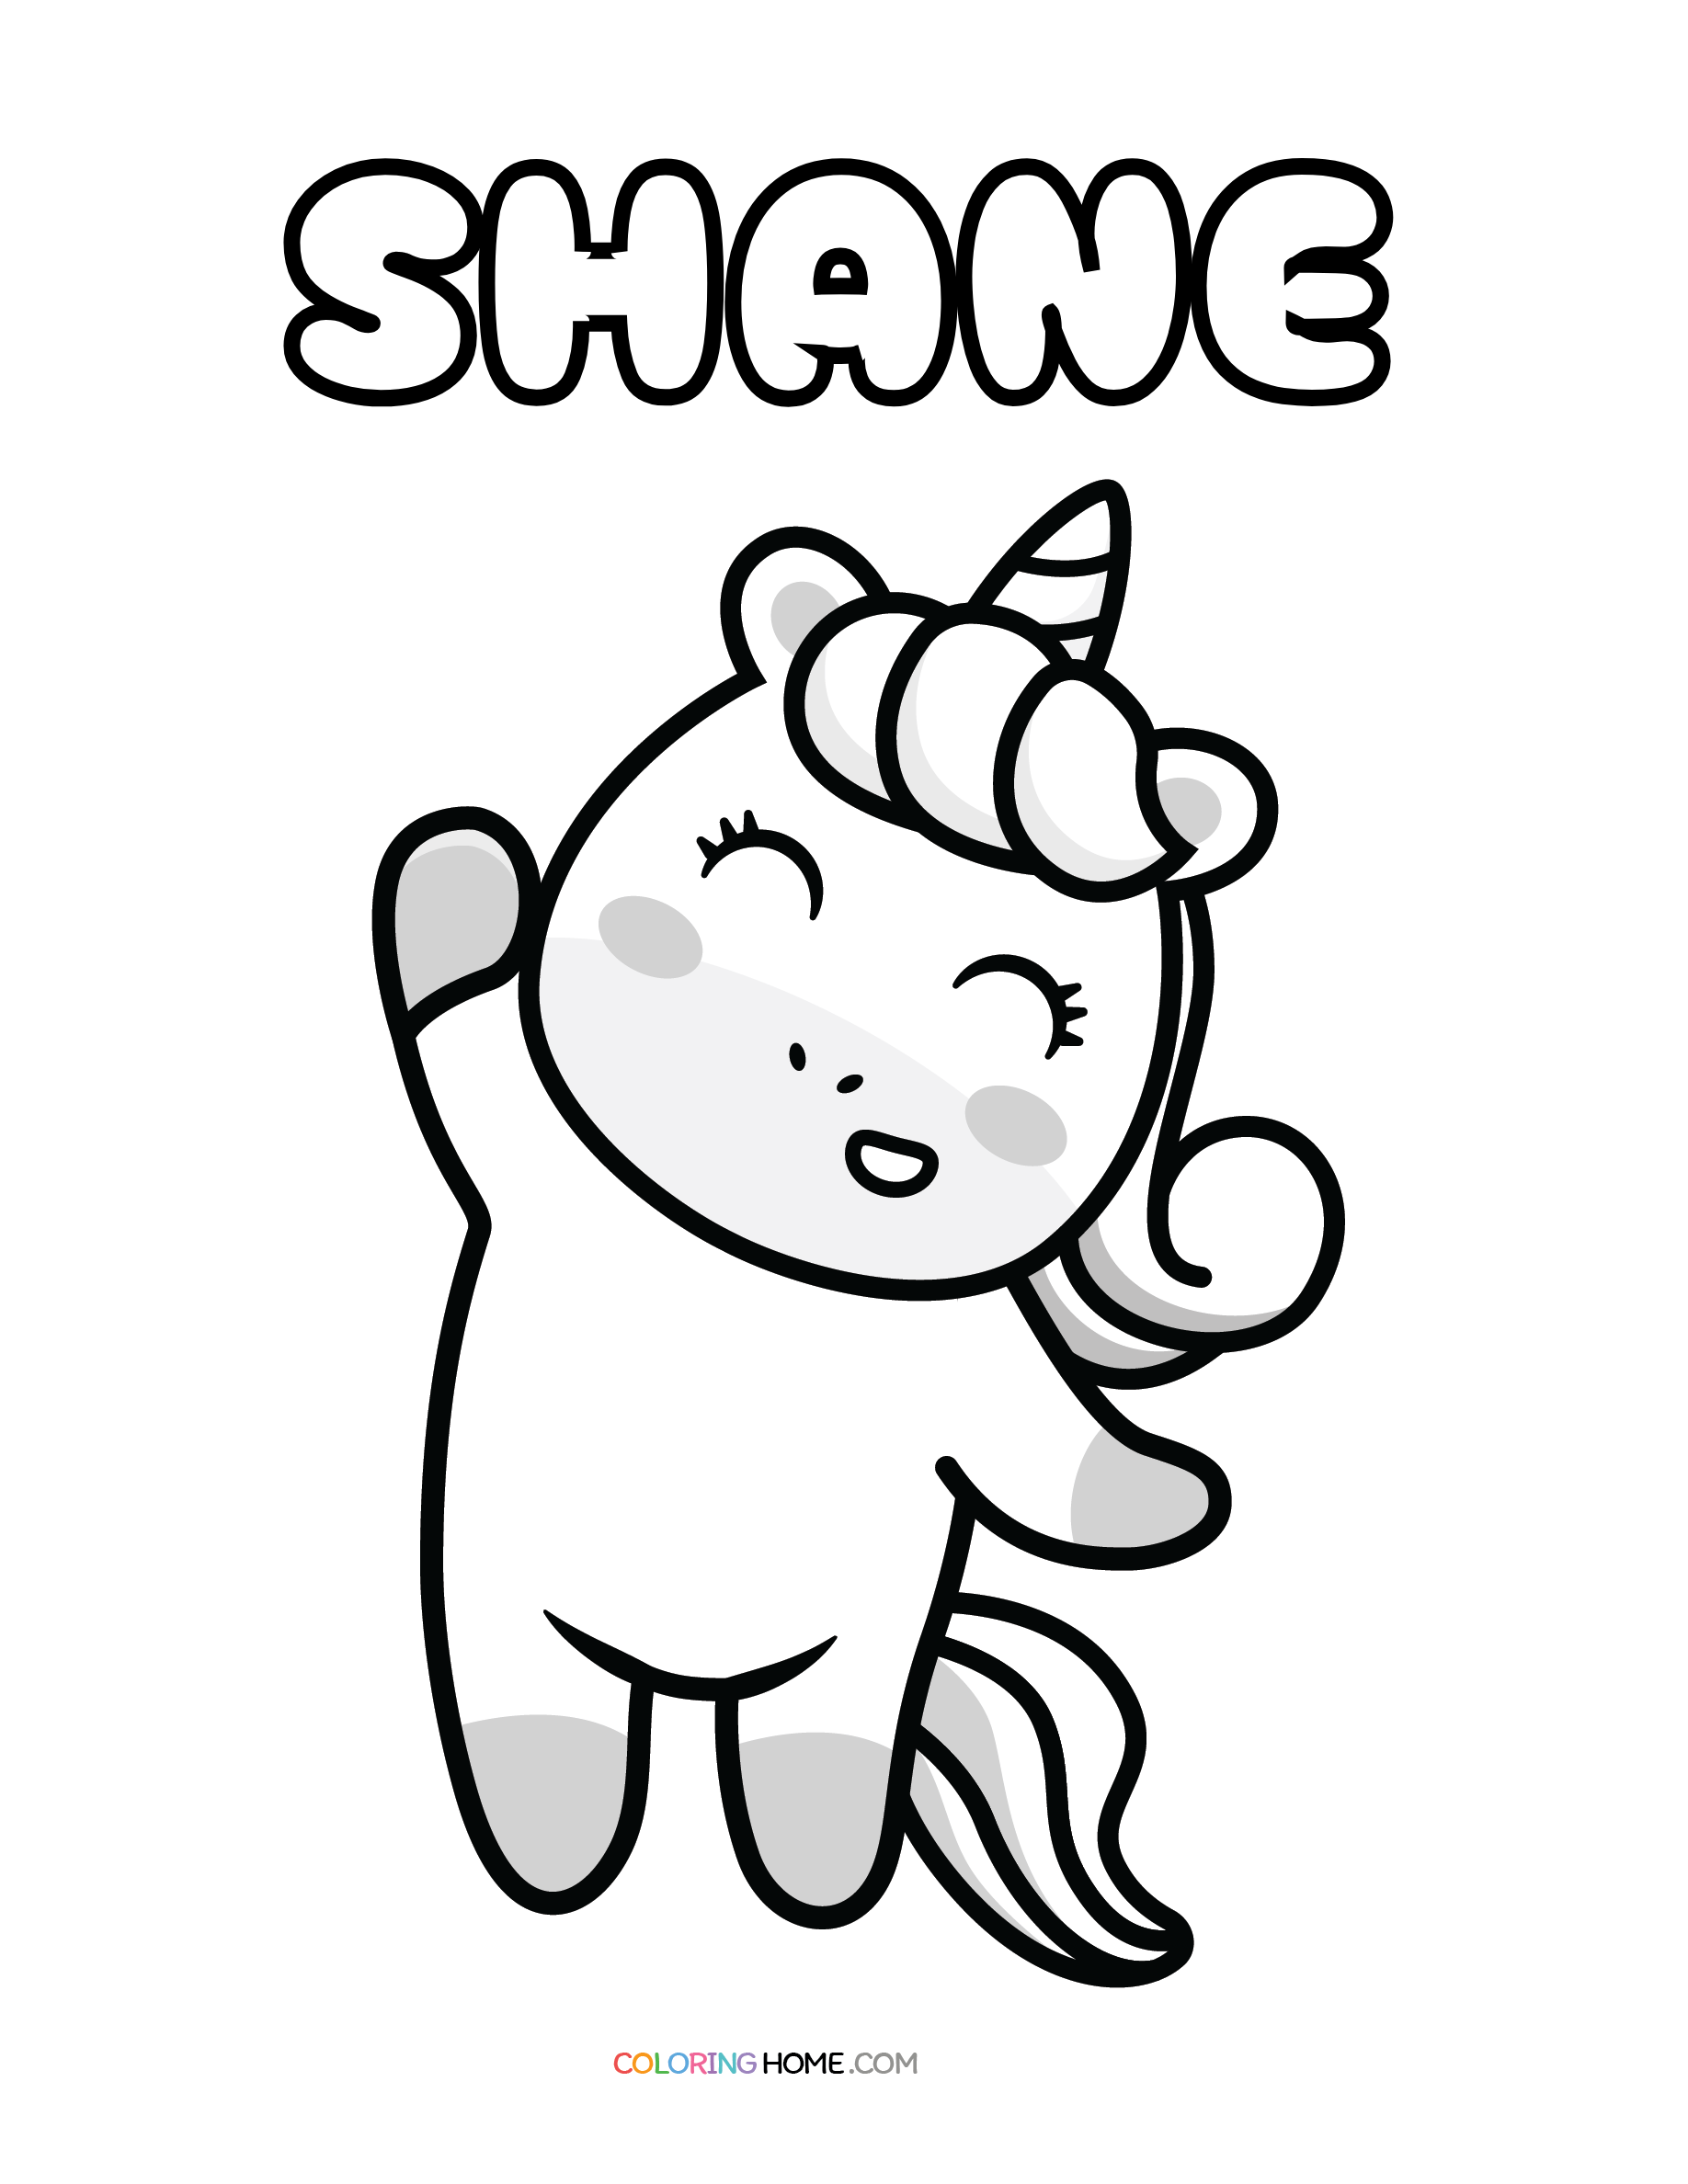 Shane unicorn coloring page